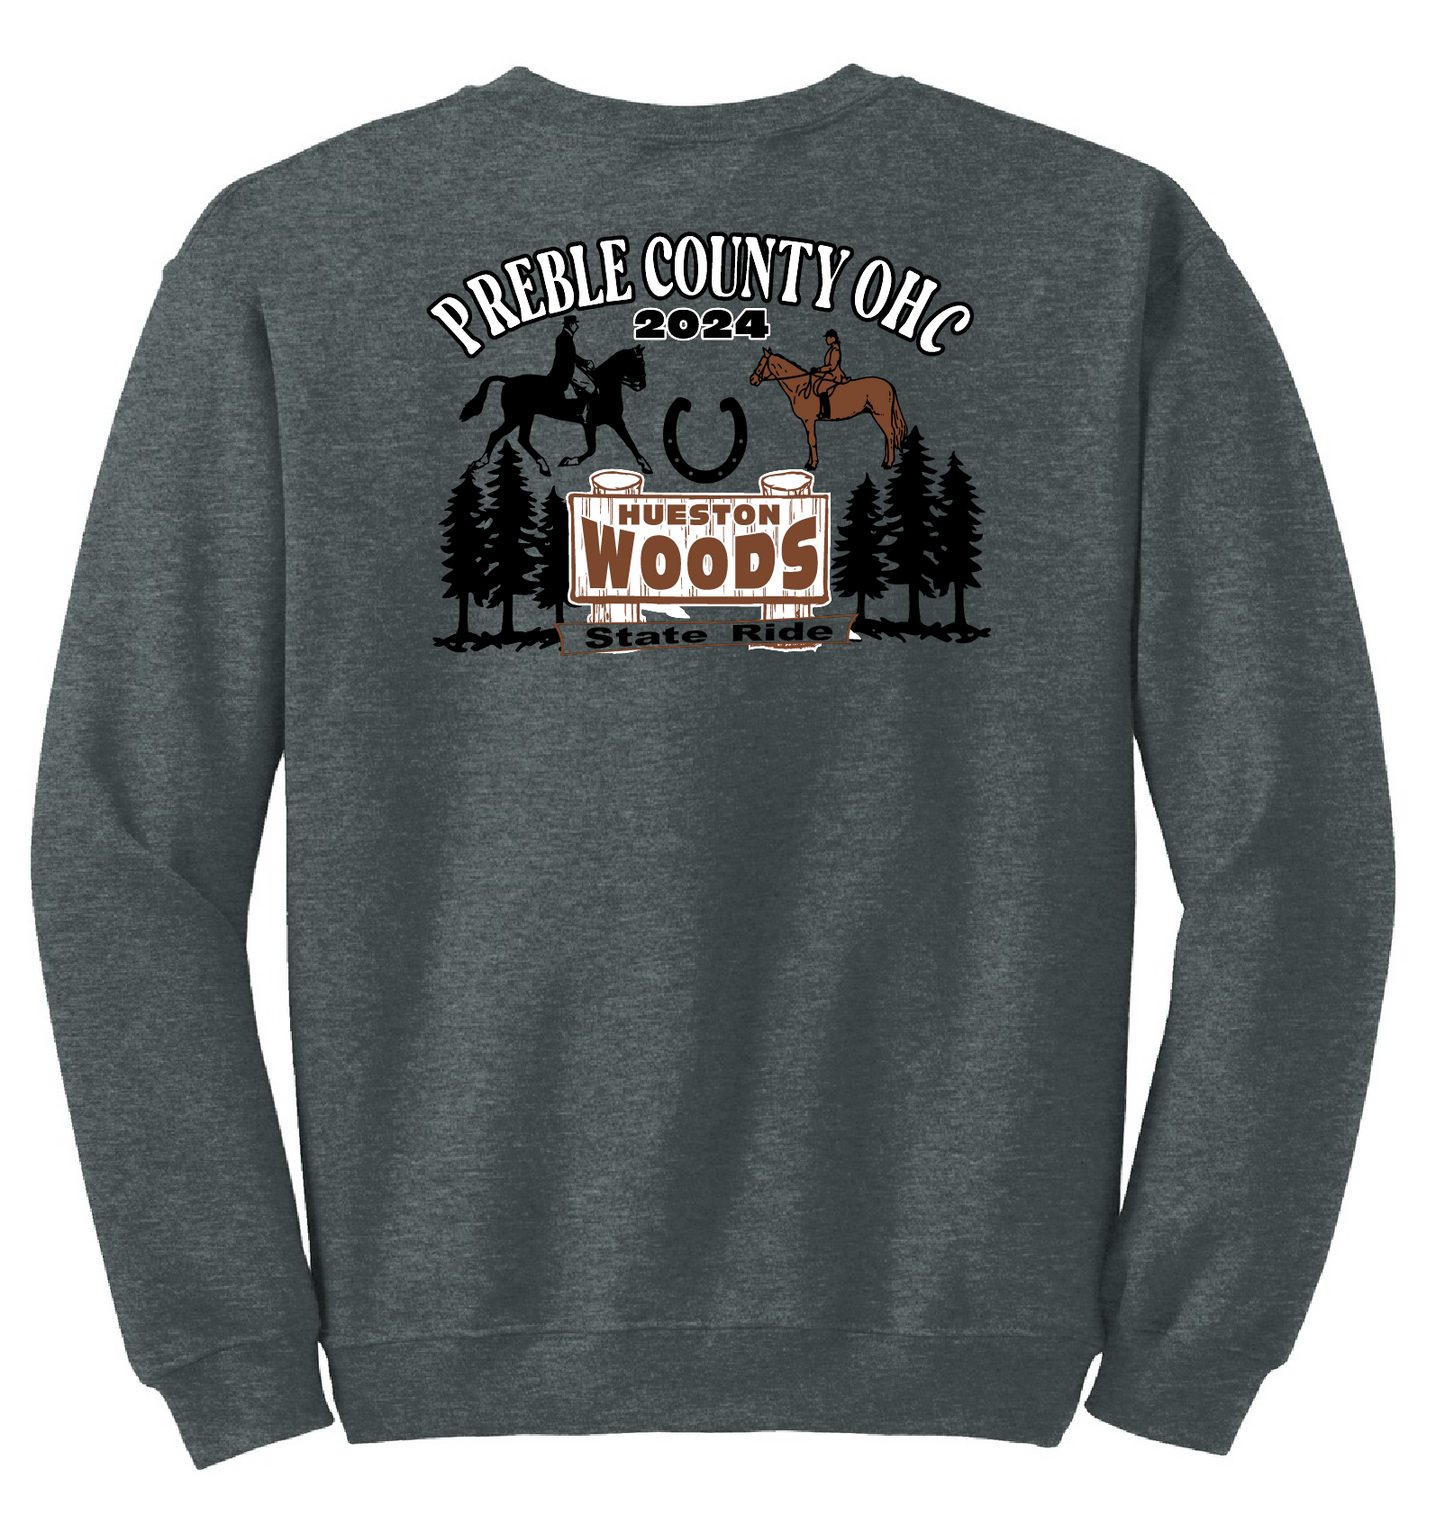 Preble County OHC-Hueston Woods Sweatshirts